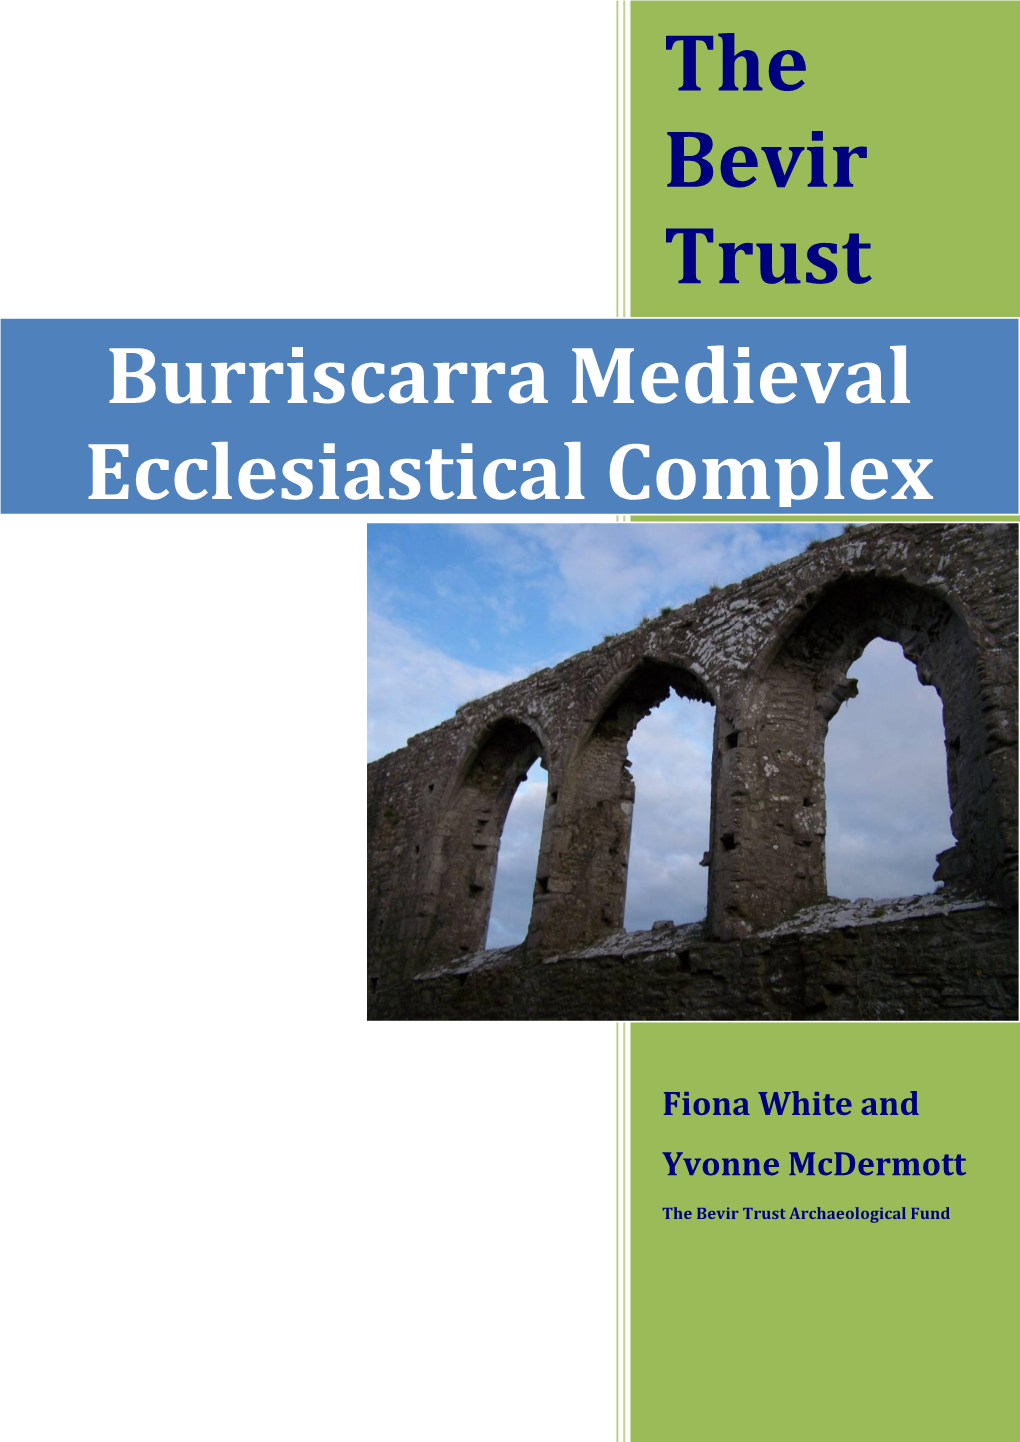 Burriscarra Medieval Ecclesiastical Complex – by Fiona